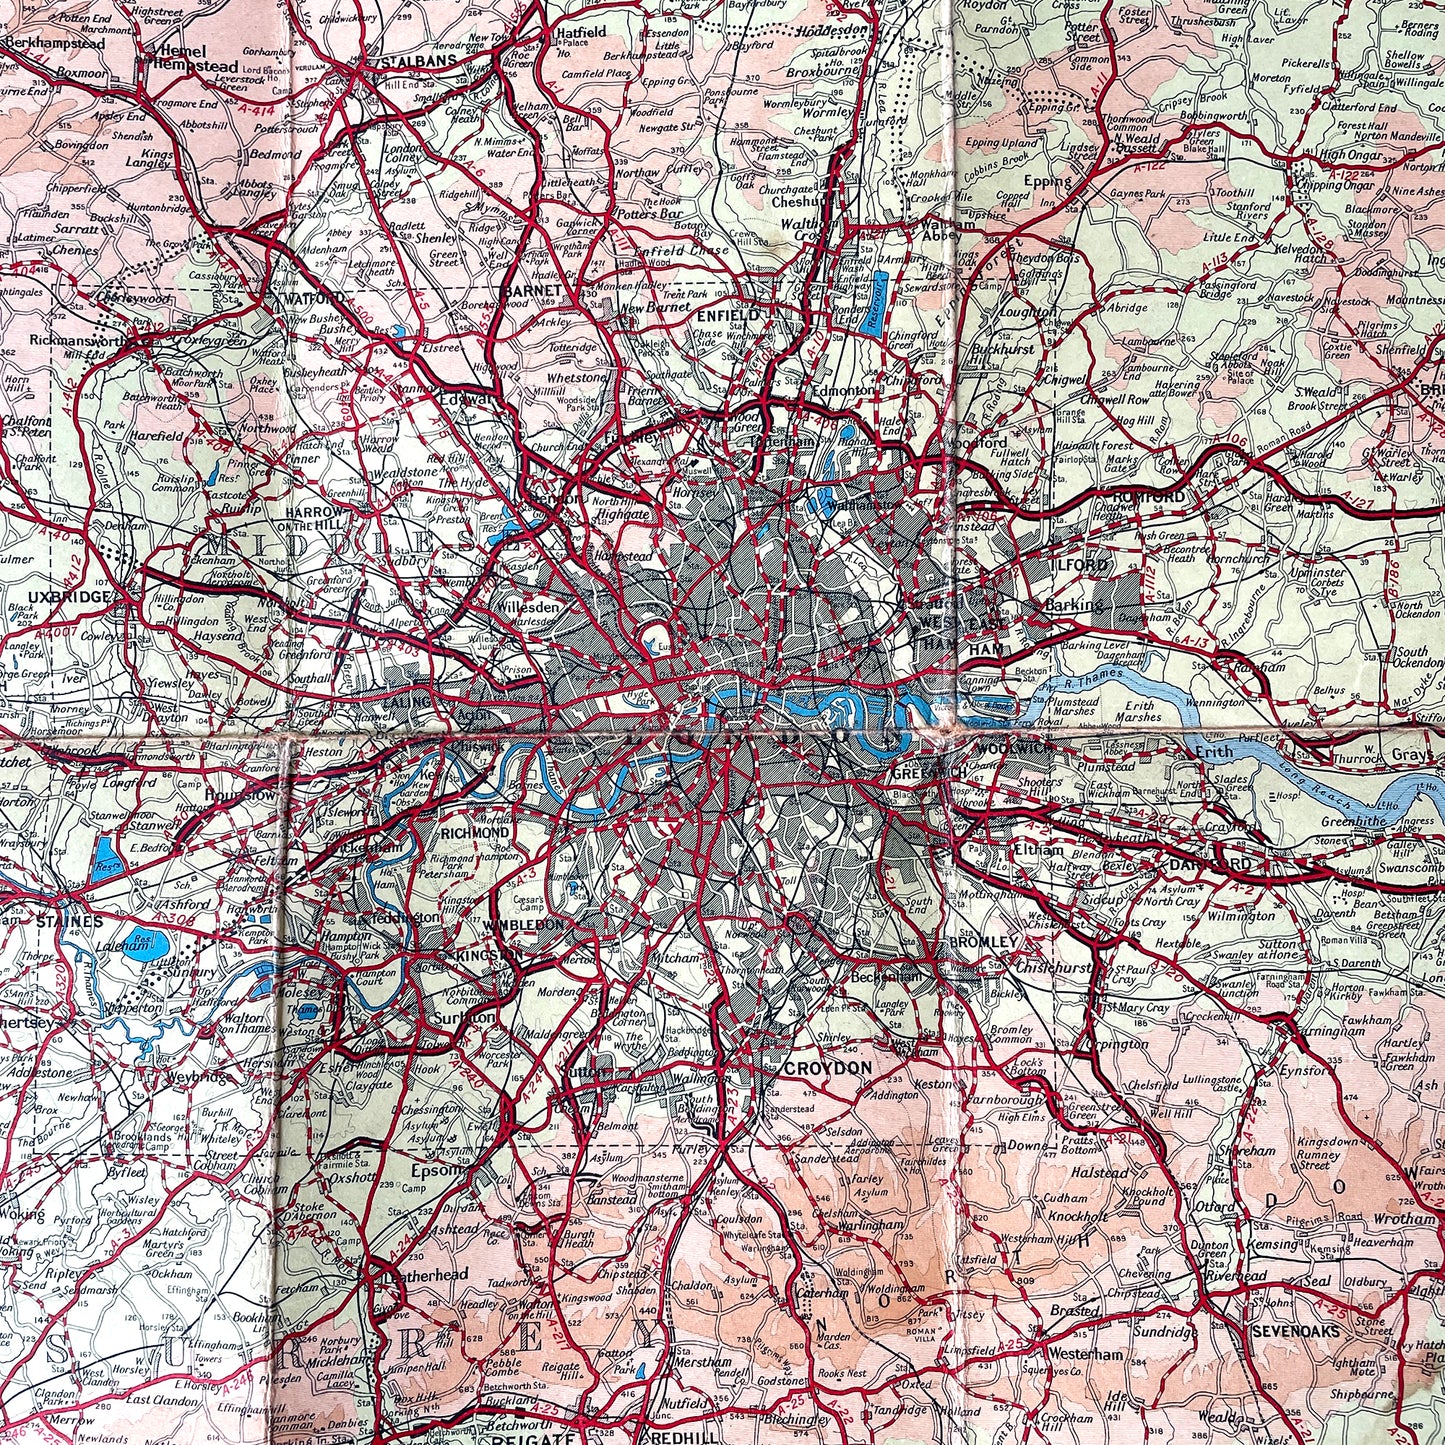 1937 Batholomew’s AA map of London & the Home Counties